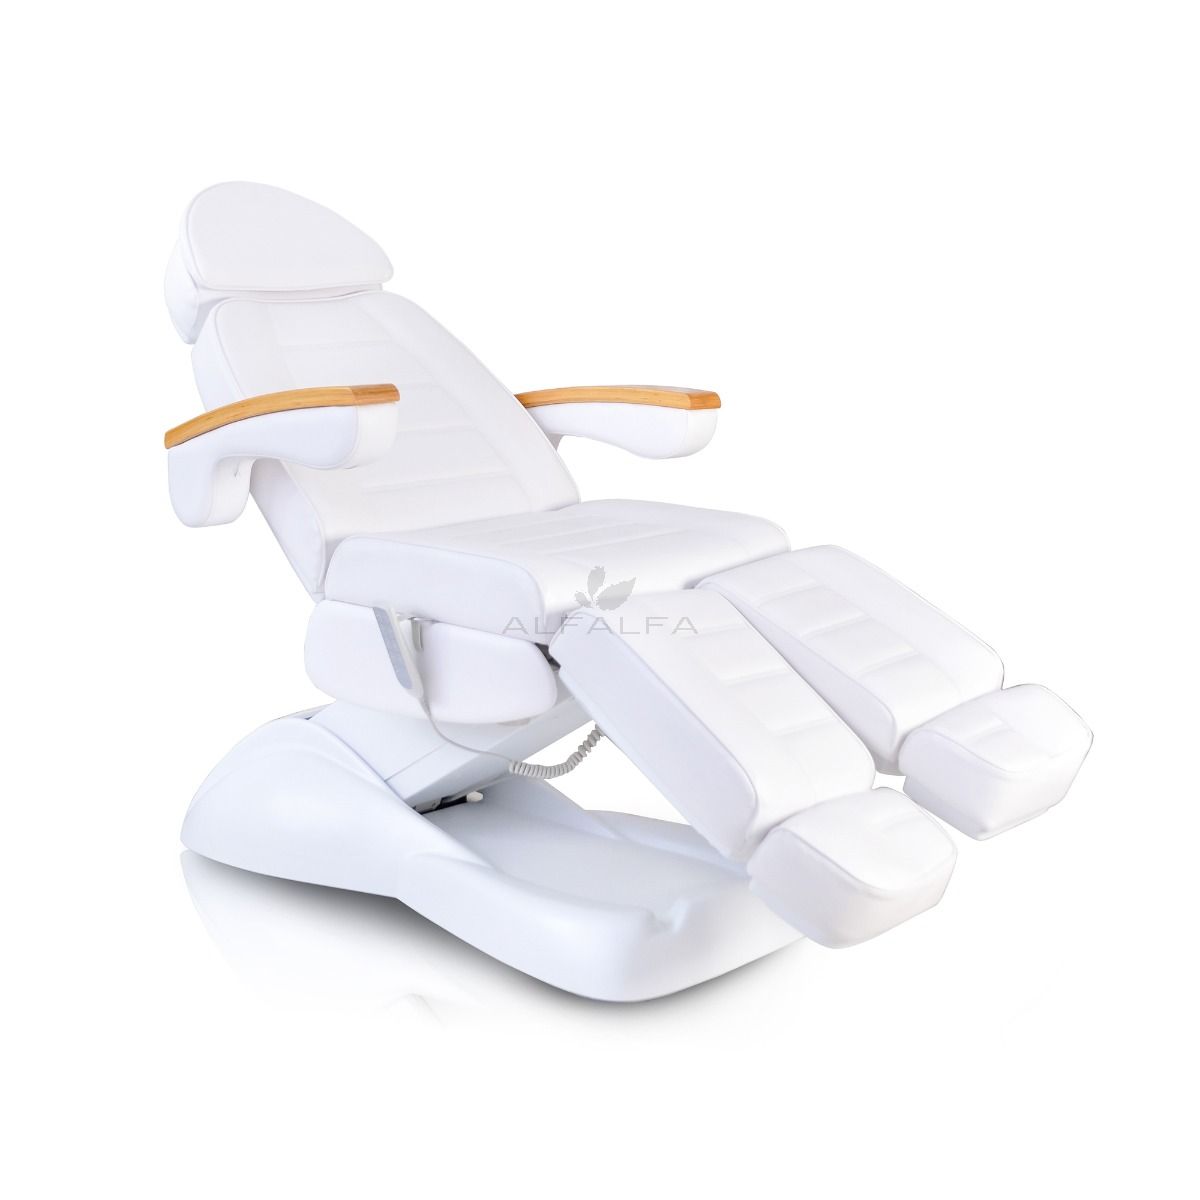 Facial Beauty Chair & Wooden Armrests, Split Legs w/ 5 Motors - White